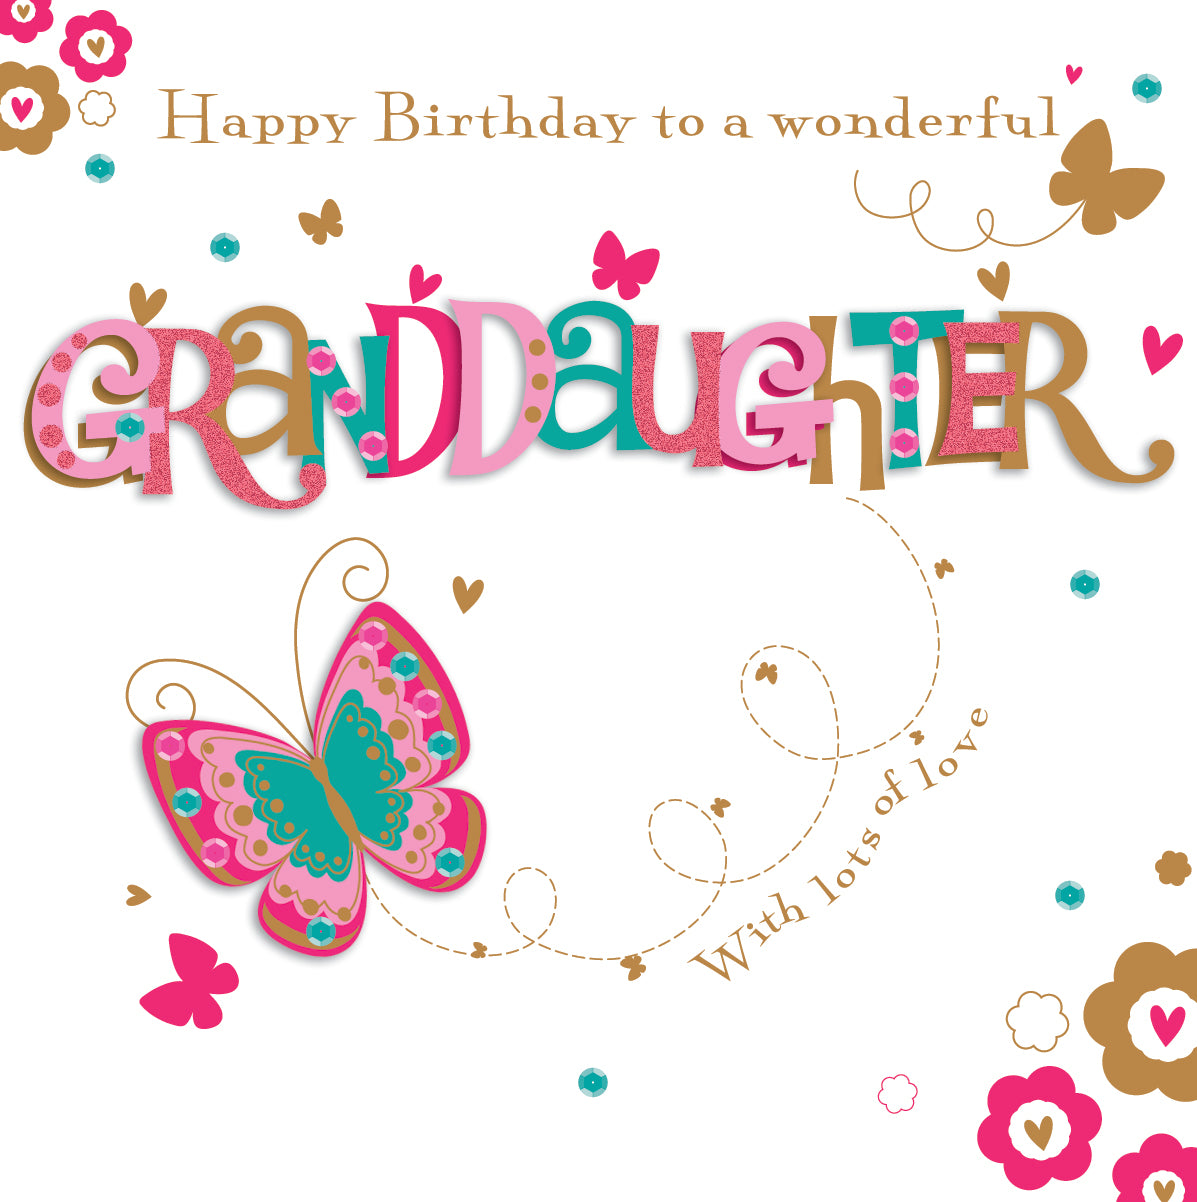 Wonderful Granddaughter Birthday Card - Butterflys